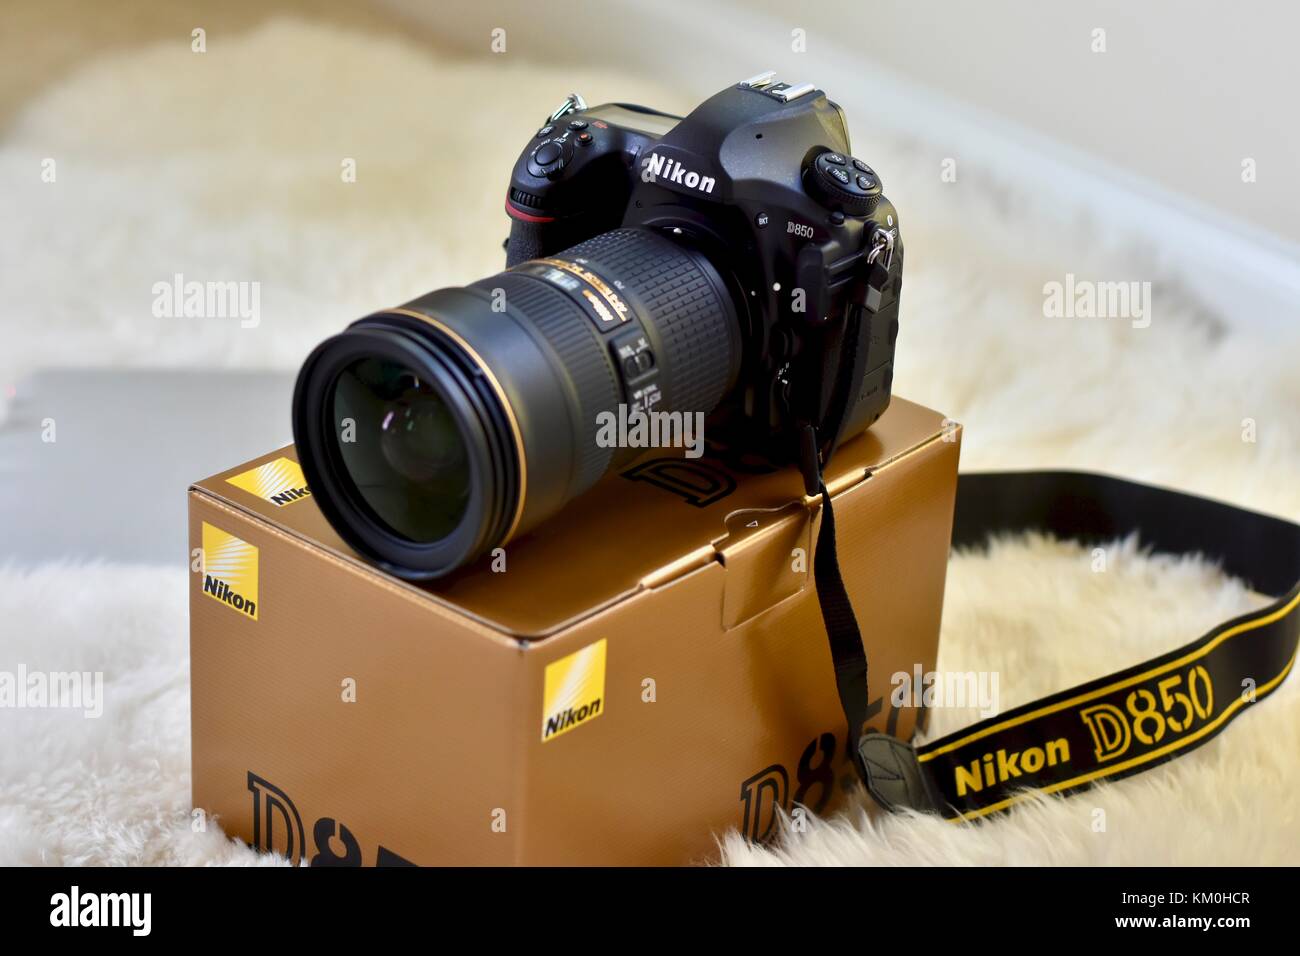 Nikon D850 DSLR camera with Nikkor 24-70 lens Stock Photo